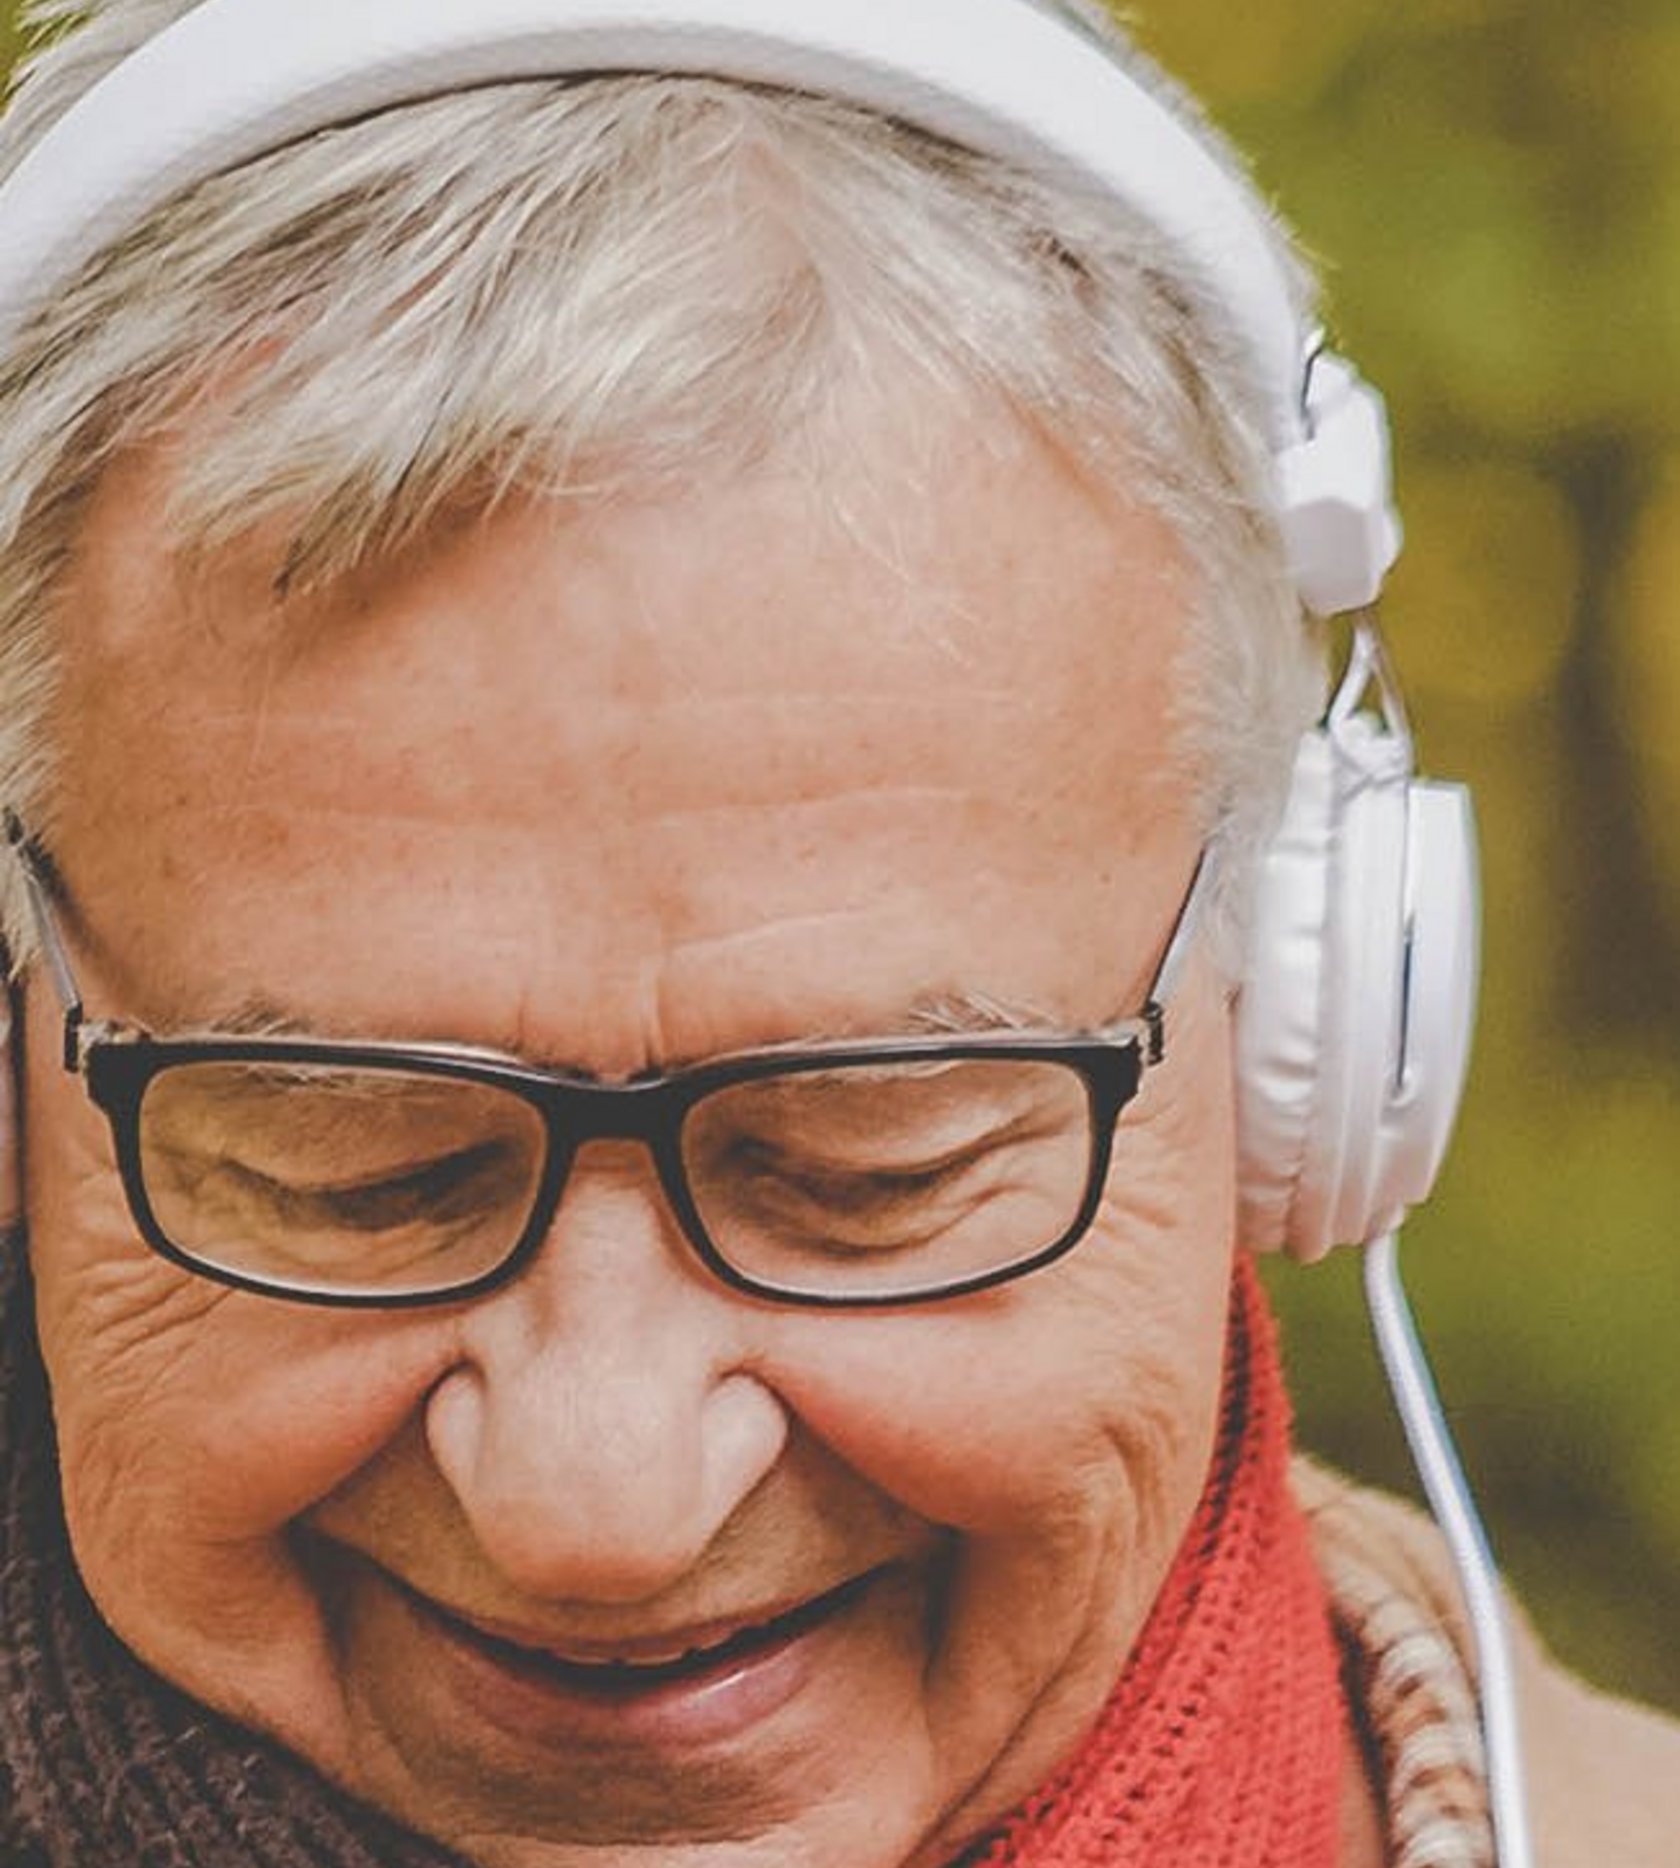  Älterer Mann mit Kopfhörern auf lacht